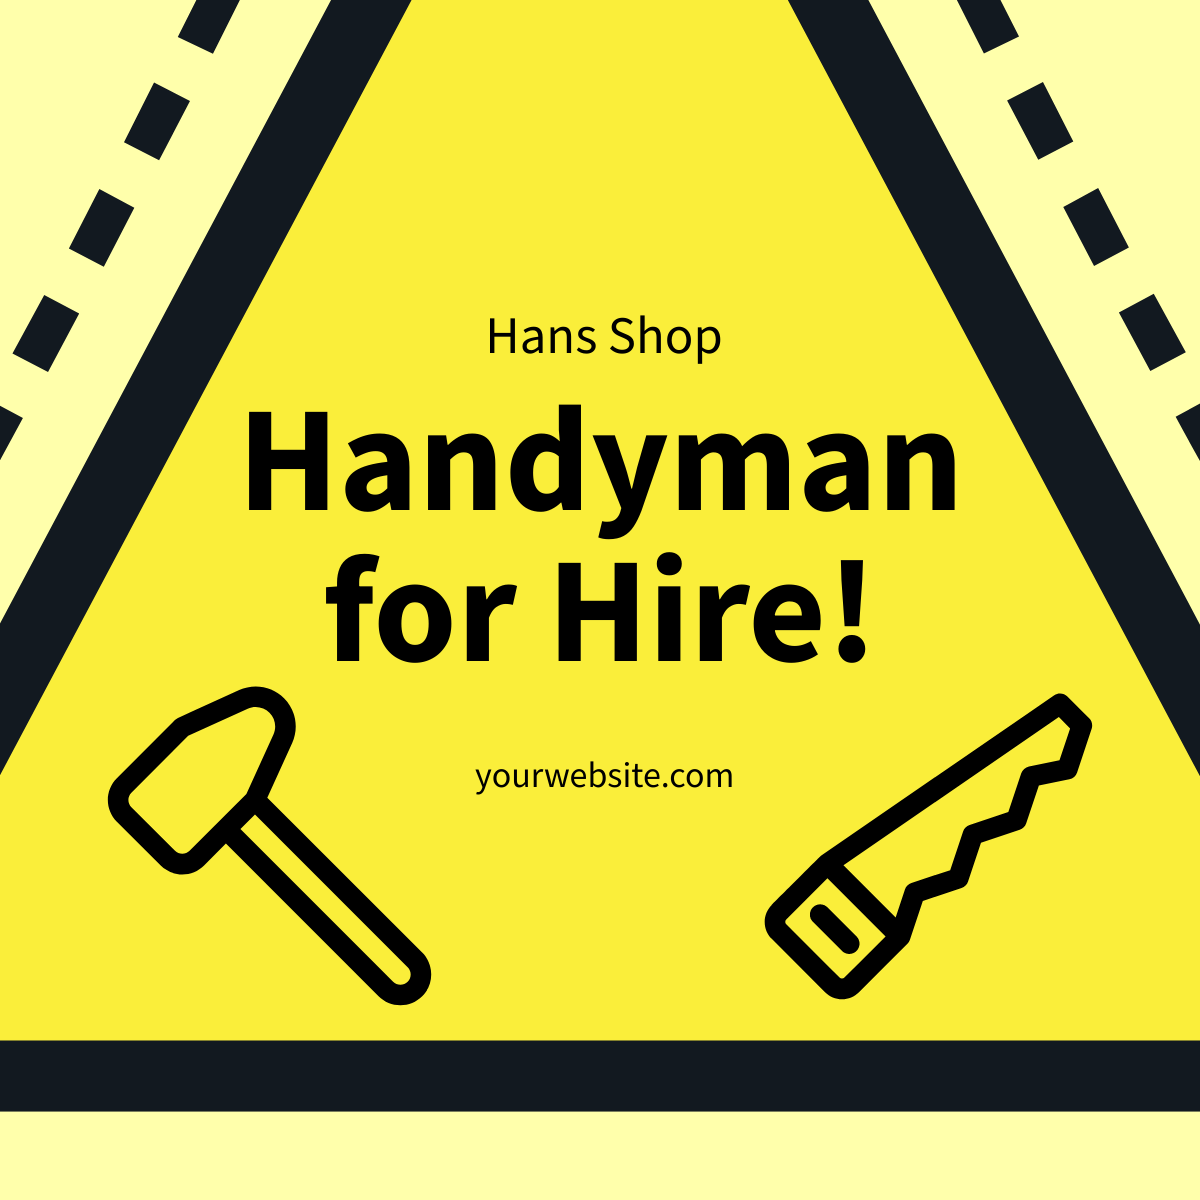 Hiring Handyman Linkedin Post Template